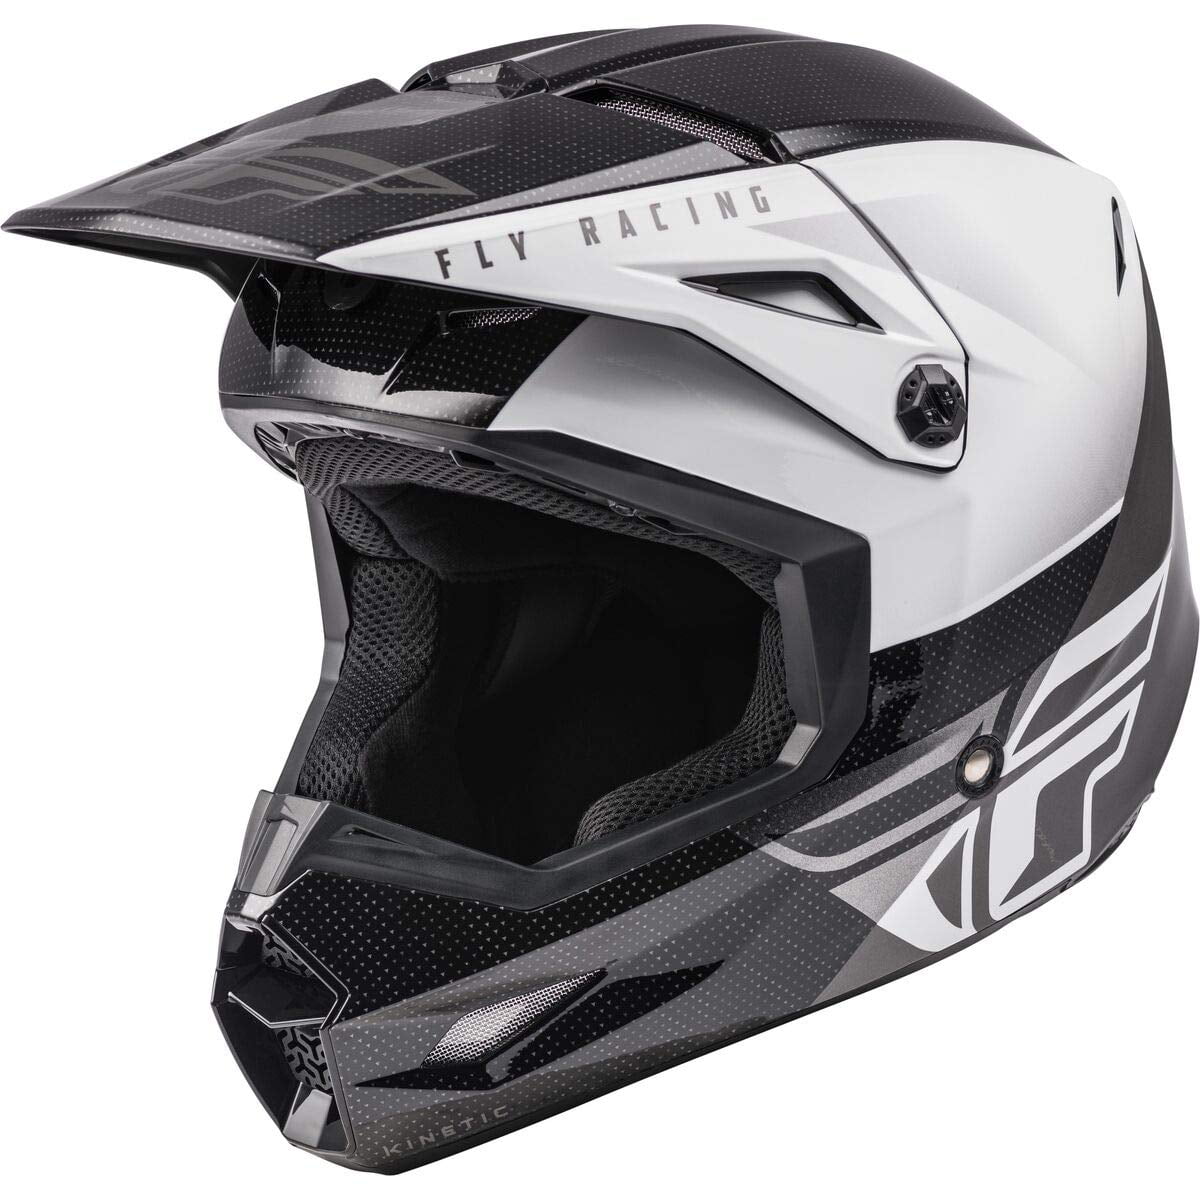 MEDIUM FLY Racing KINETIC Edge Adult Helmet RED/WHITE/BLUE Motocross MX ATV